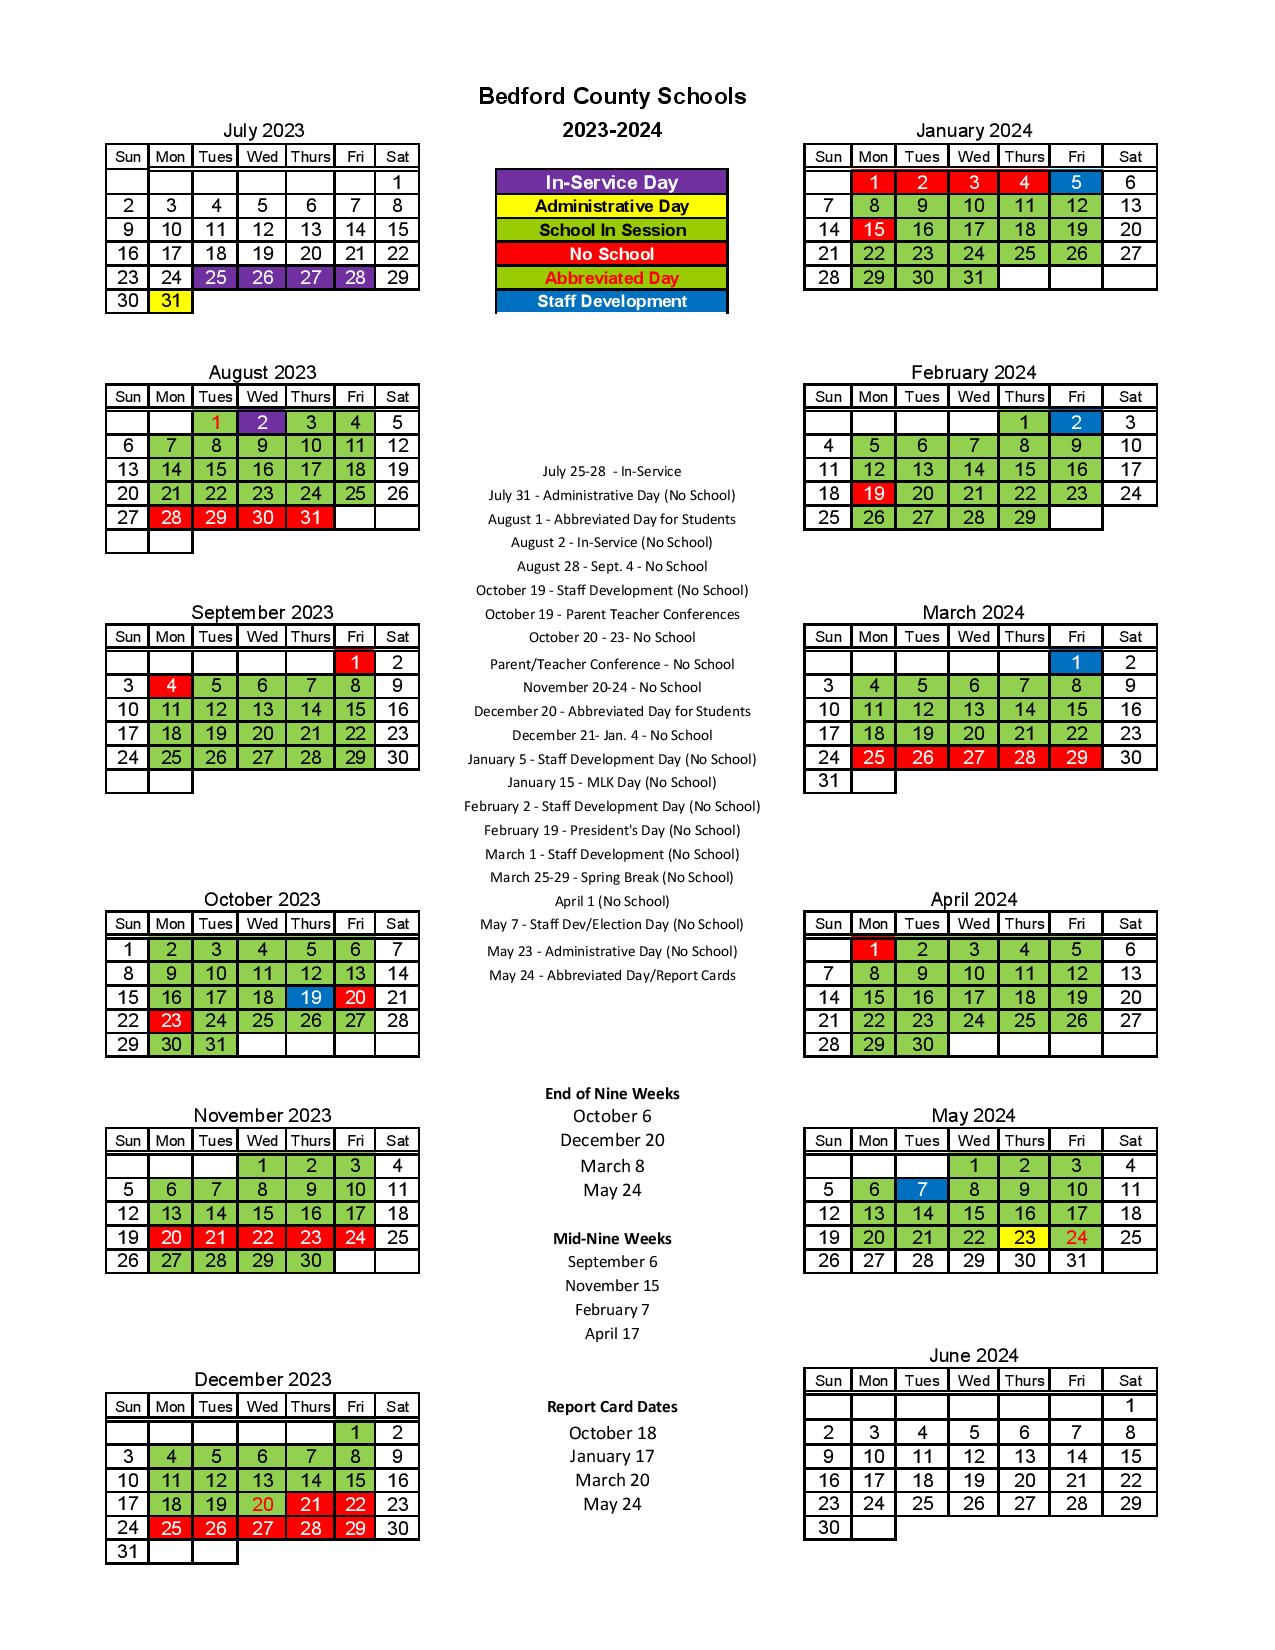 Bedford County Schools Calendar 2023 2024 in PDF